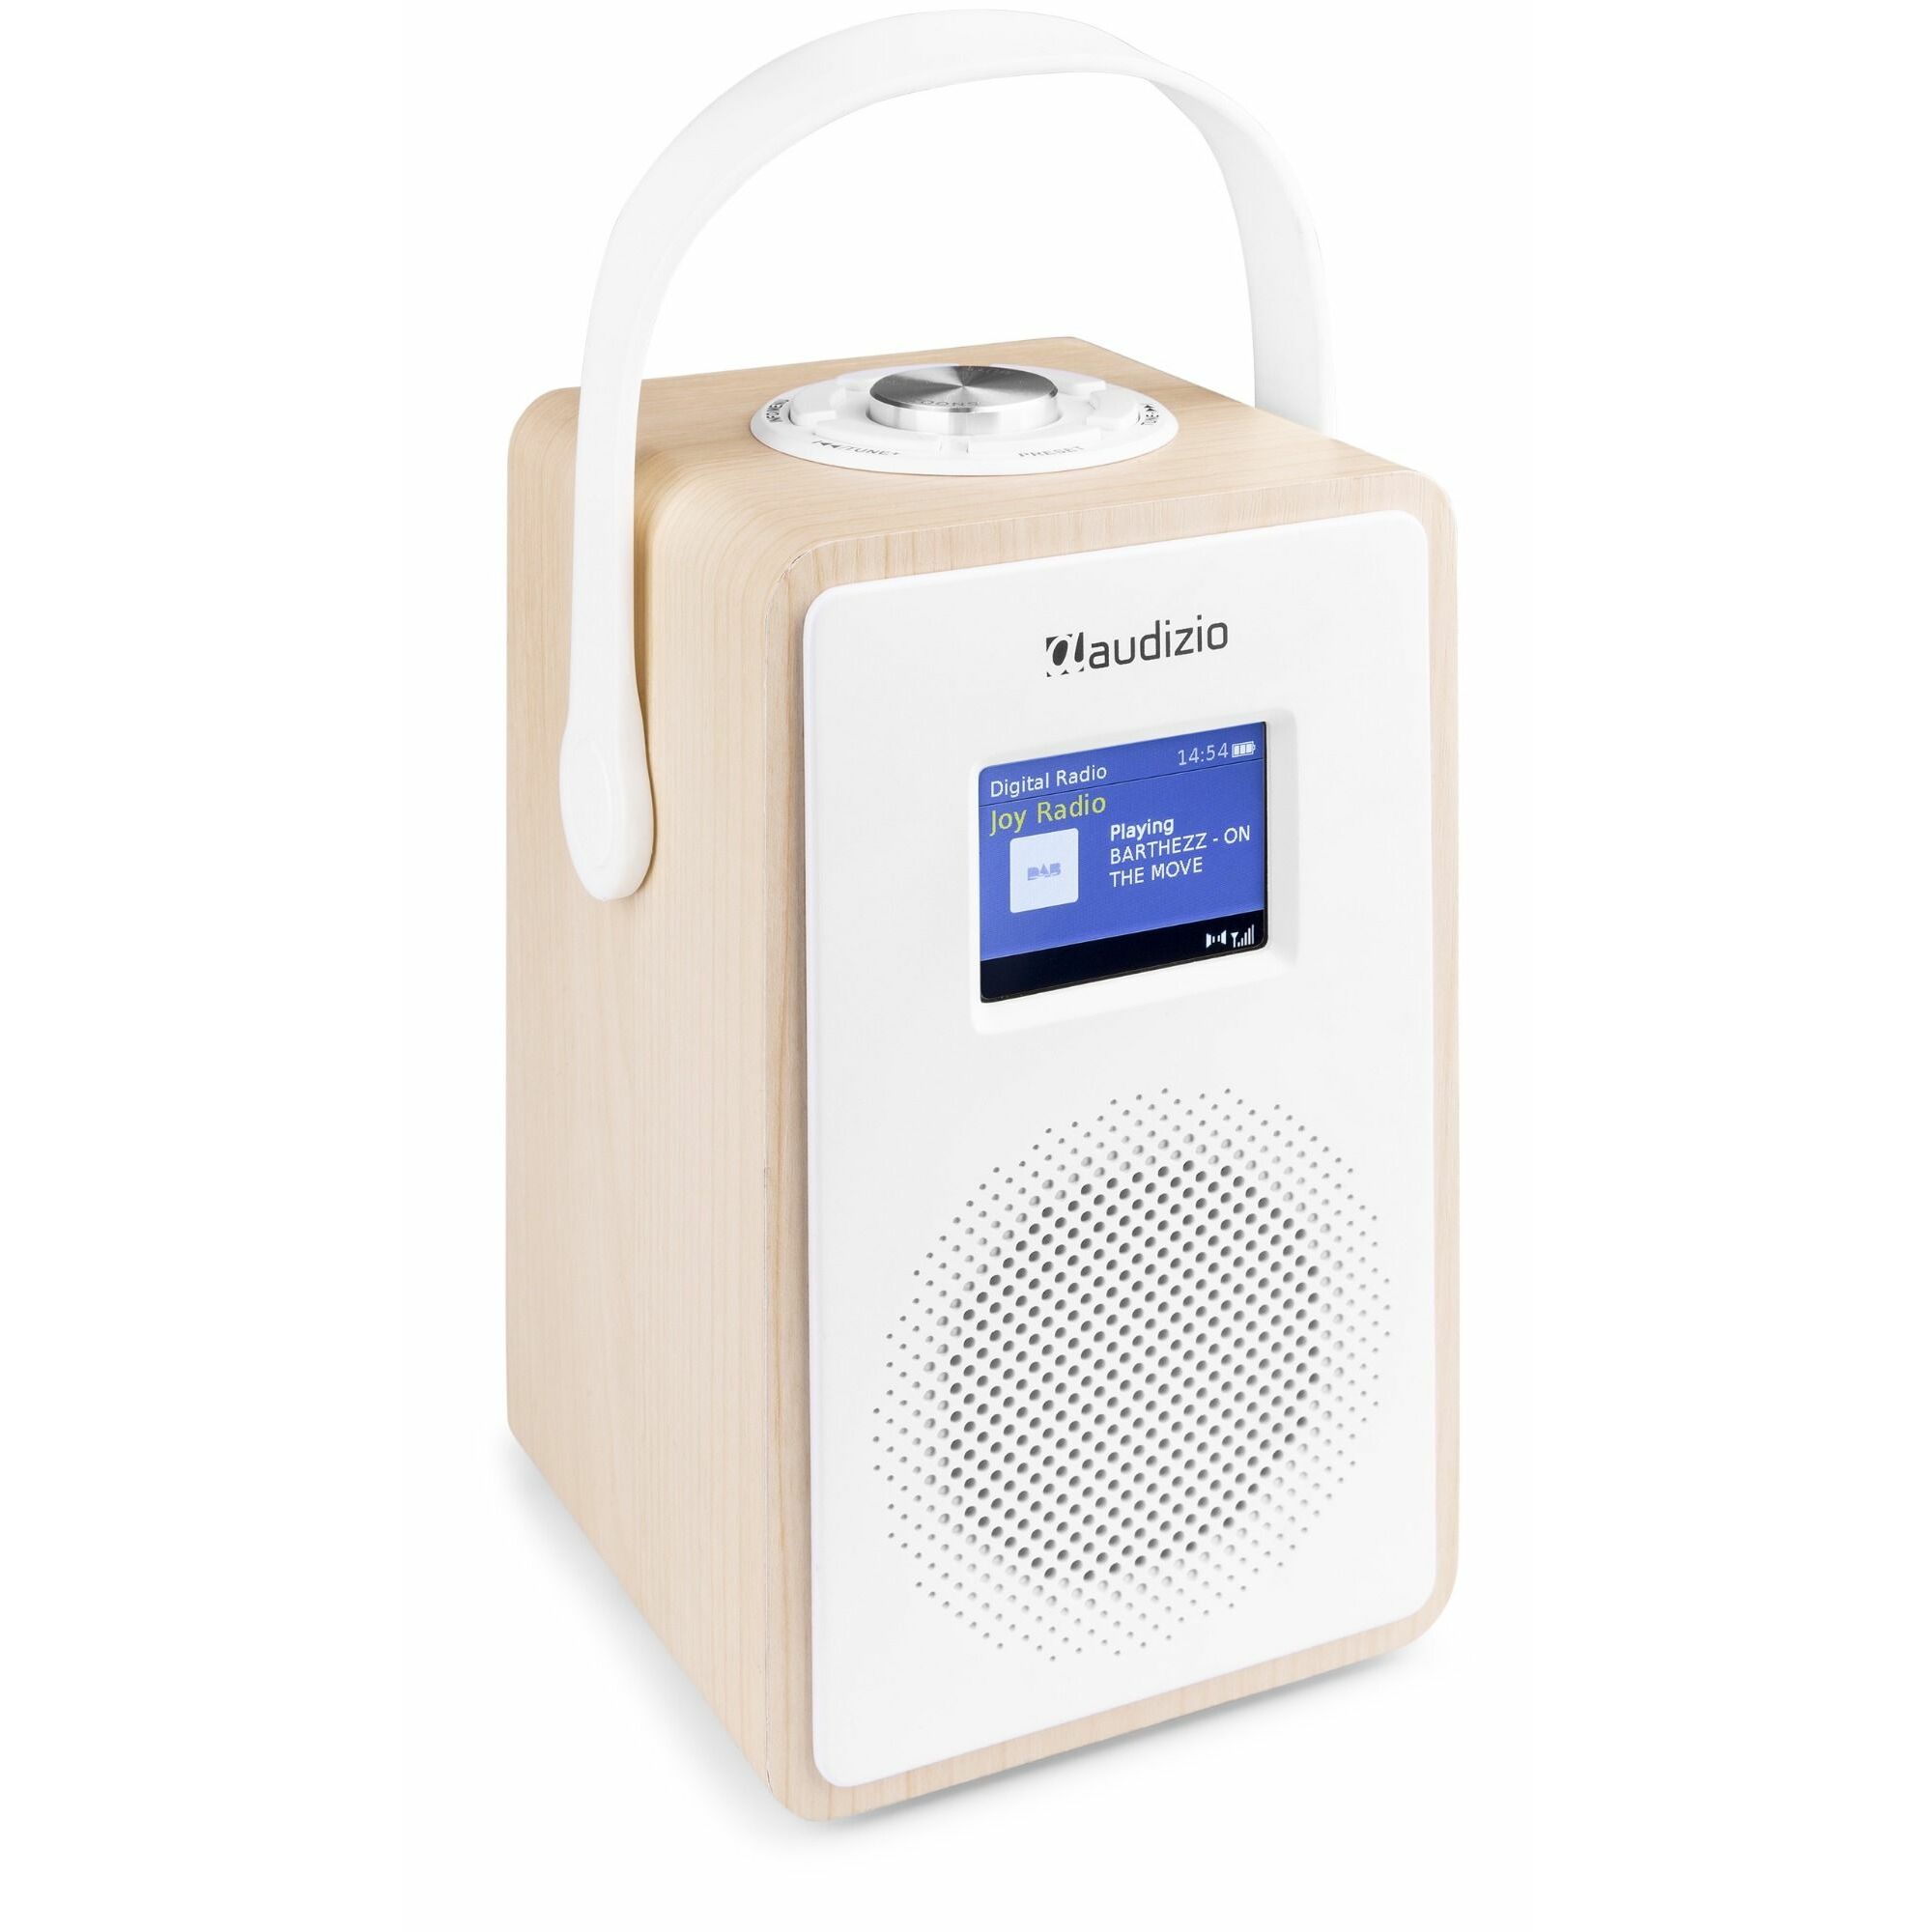 Audizio Modena draagbare radio met DAB, Bluetooth en accu - Wit